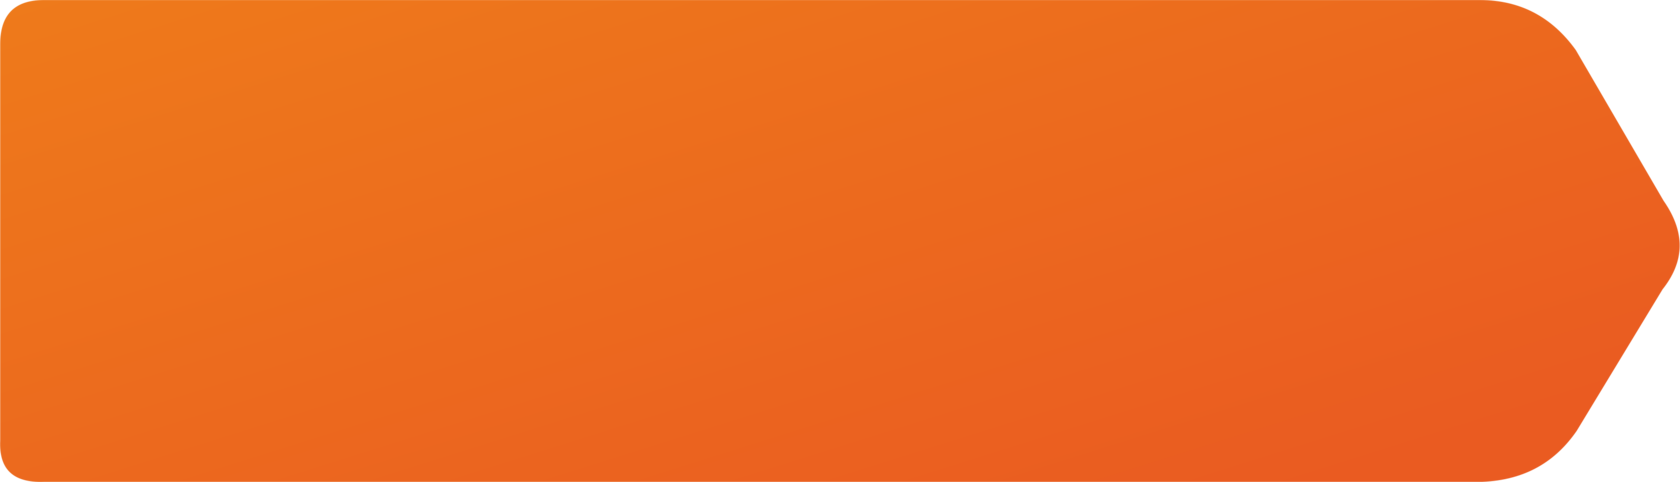 Оранжевый 1 1 20 август 2021. Кислотно оранжевый цвет РГБ. Яркий оранжевый цвет. Приятный оранжевый цвет. Оранжевый цвет RGB.